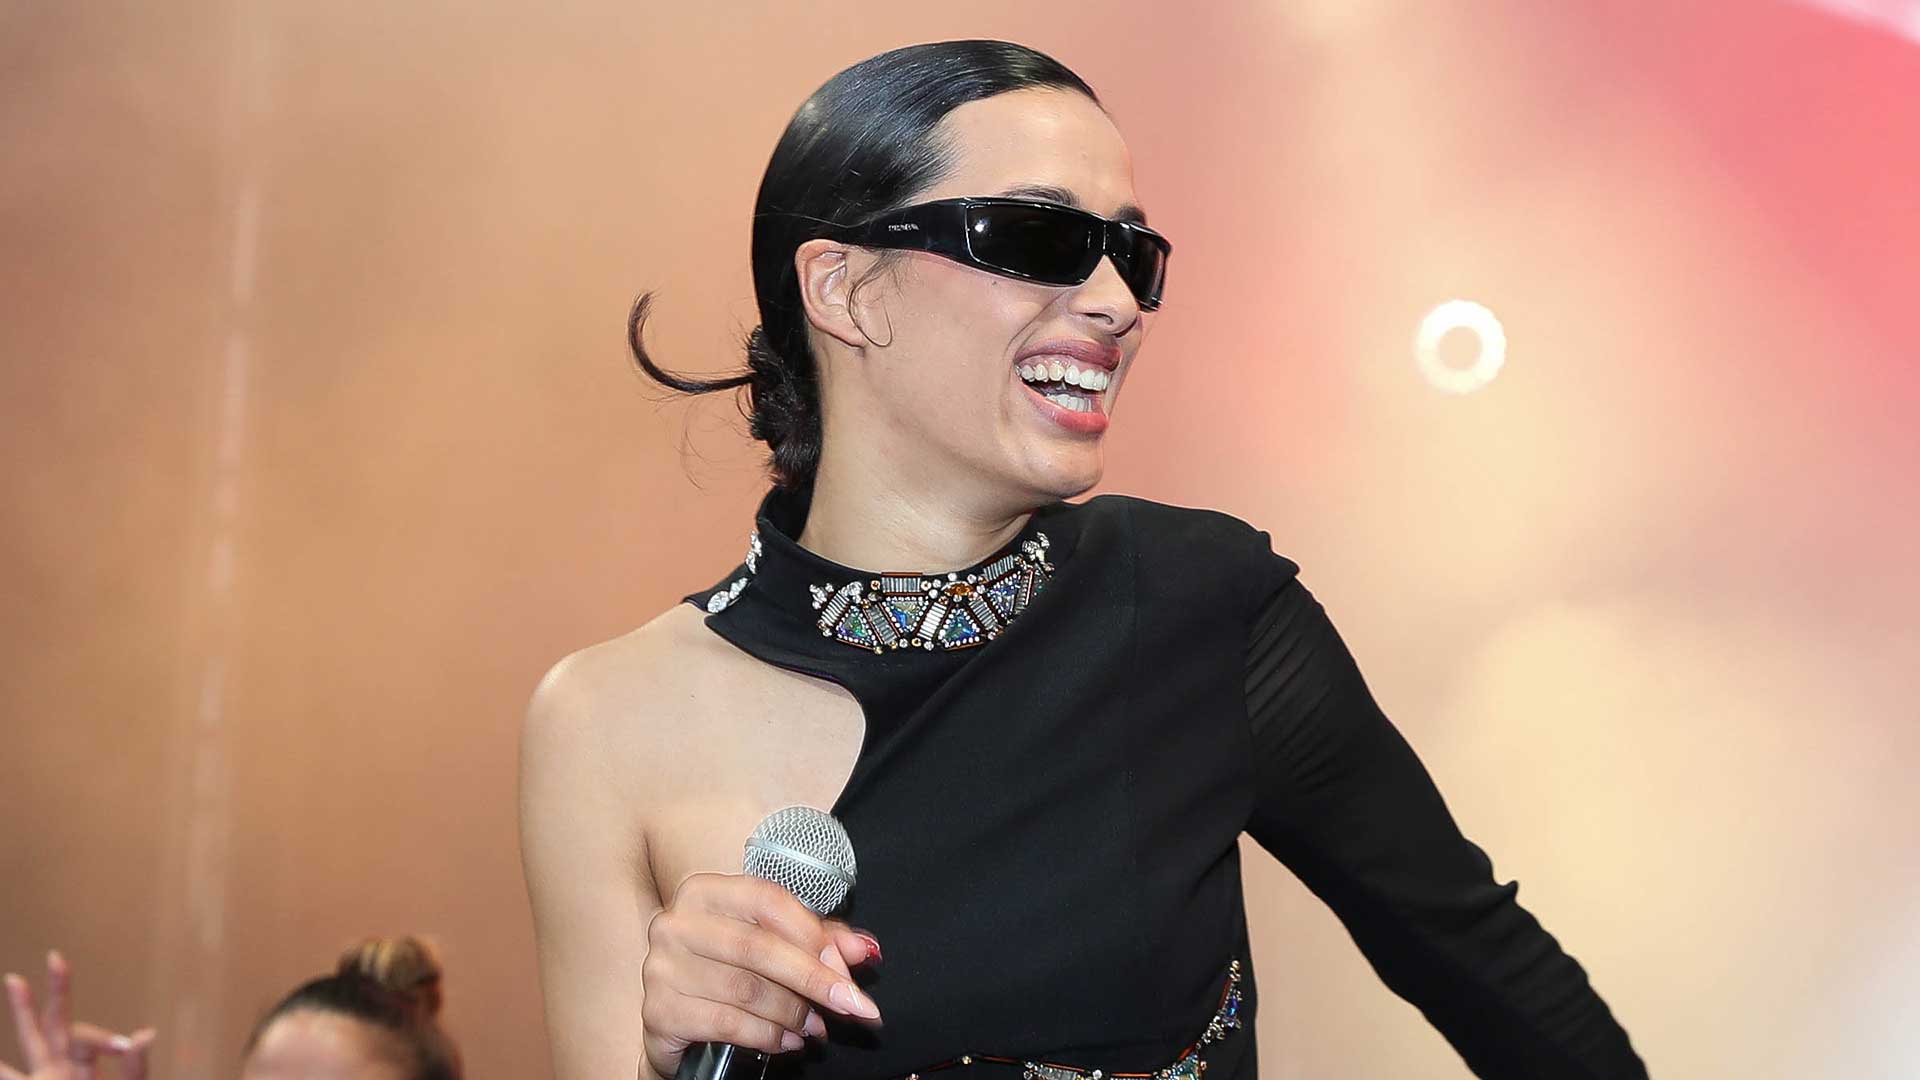 El problema de salud que obligó a Chanel a llevar gafas de sol